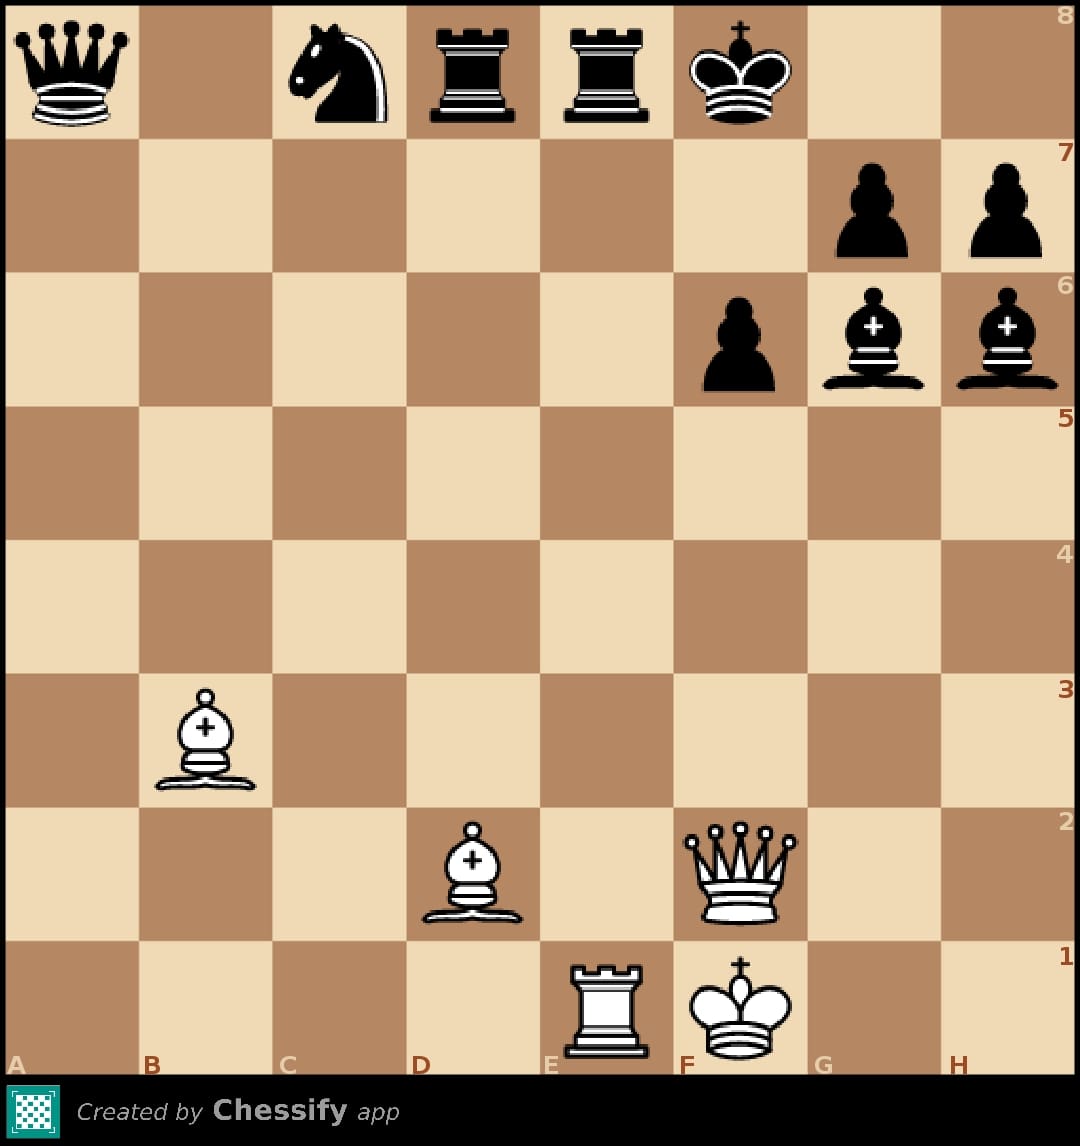 How to improve my chess skill - Quora